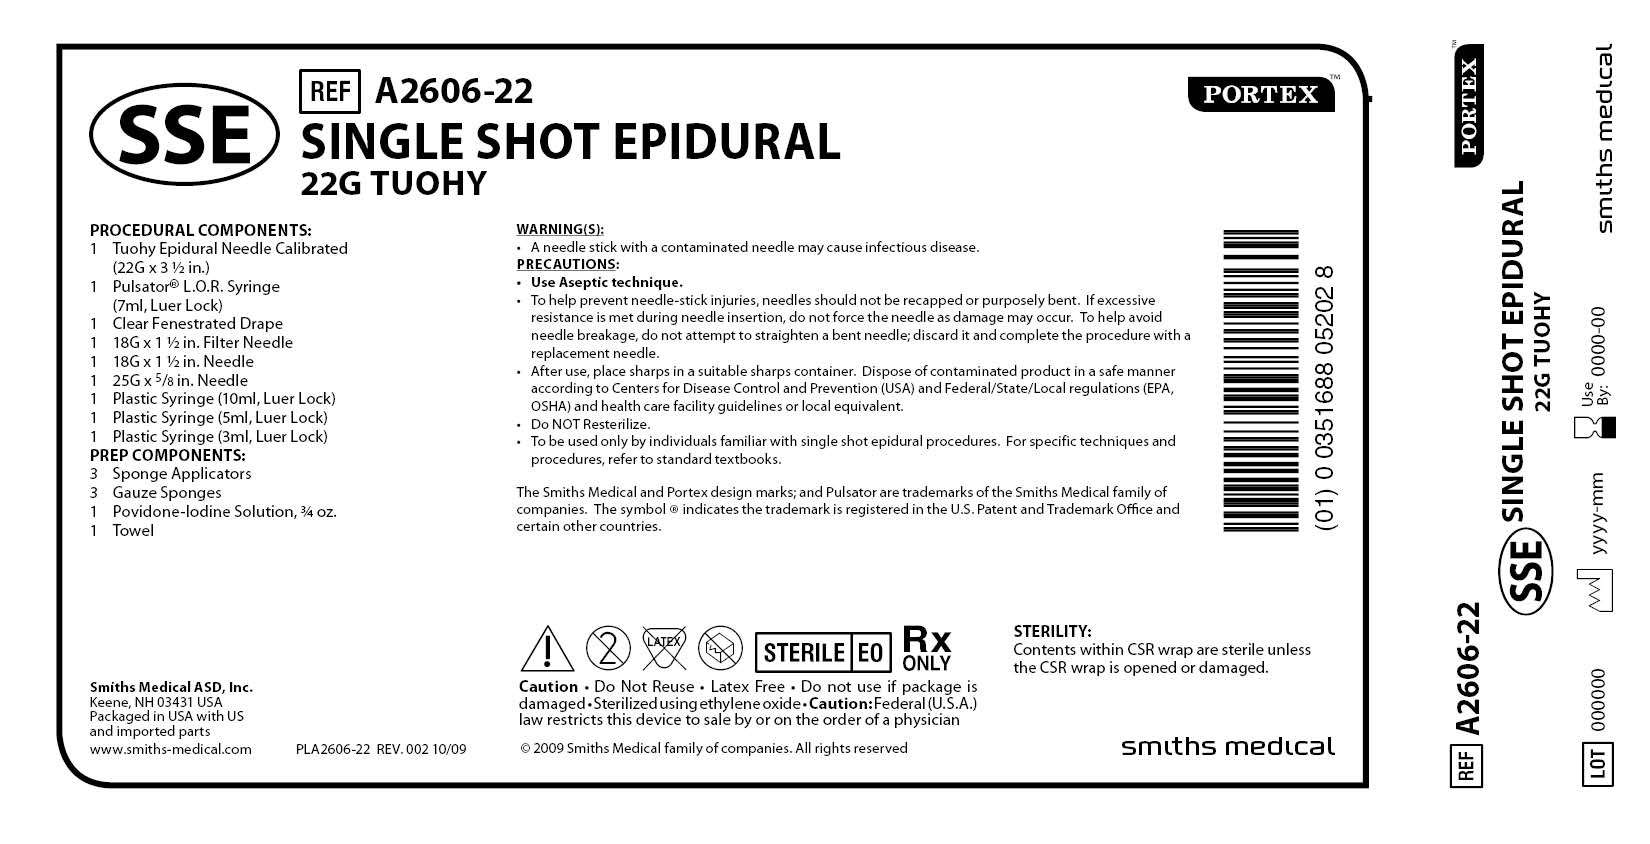 A2606-22 SINGLE SHOT EPIDURAL